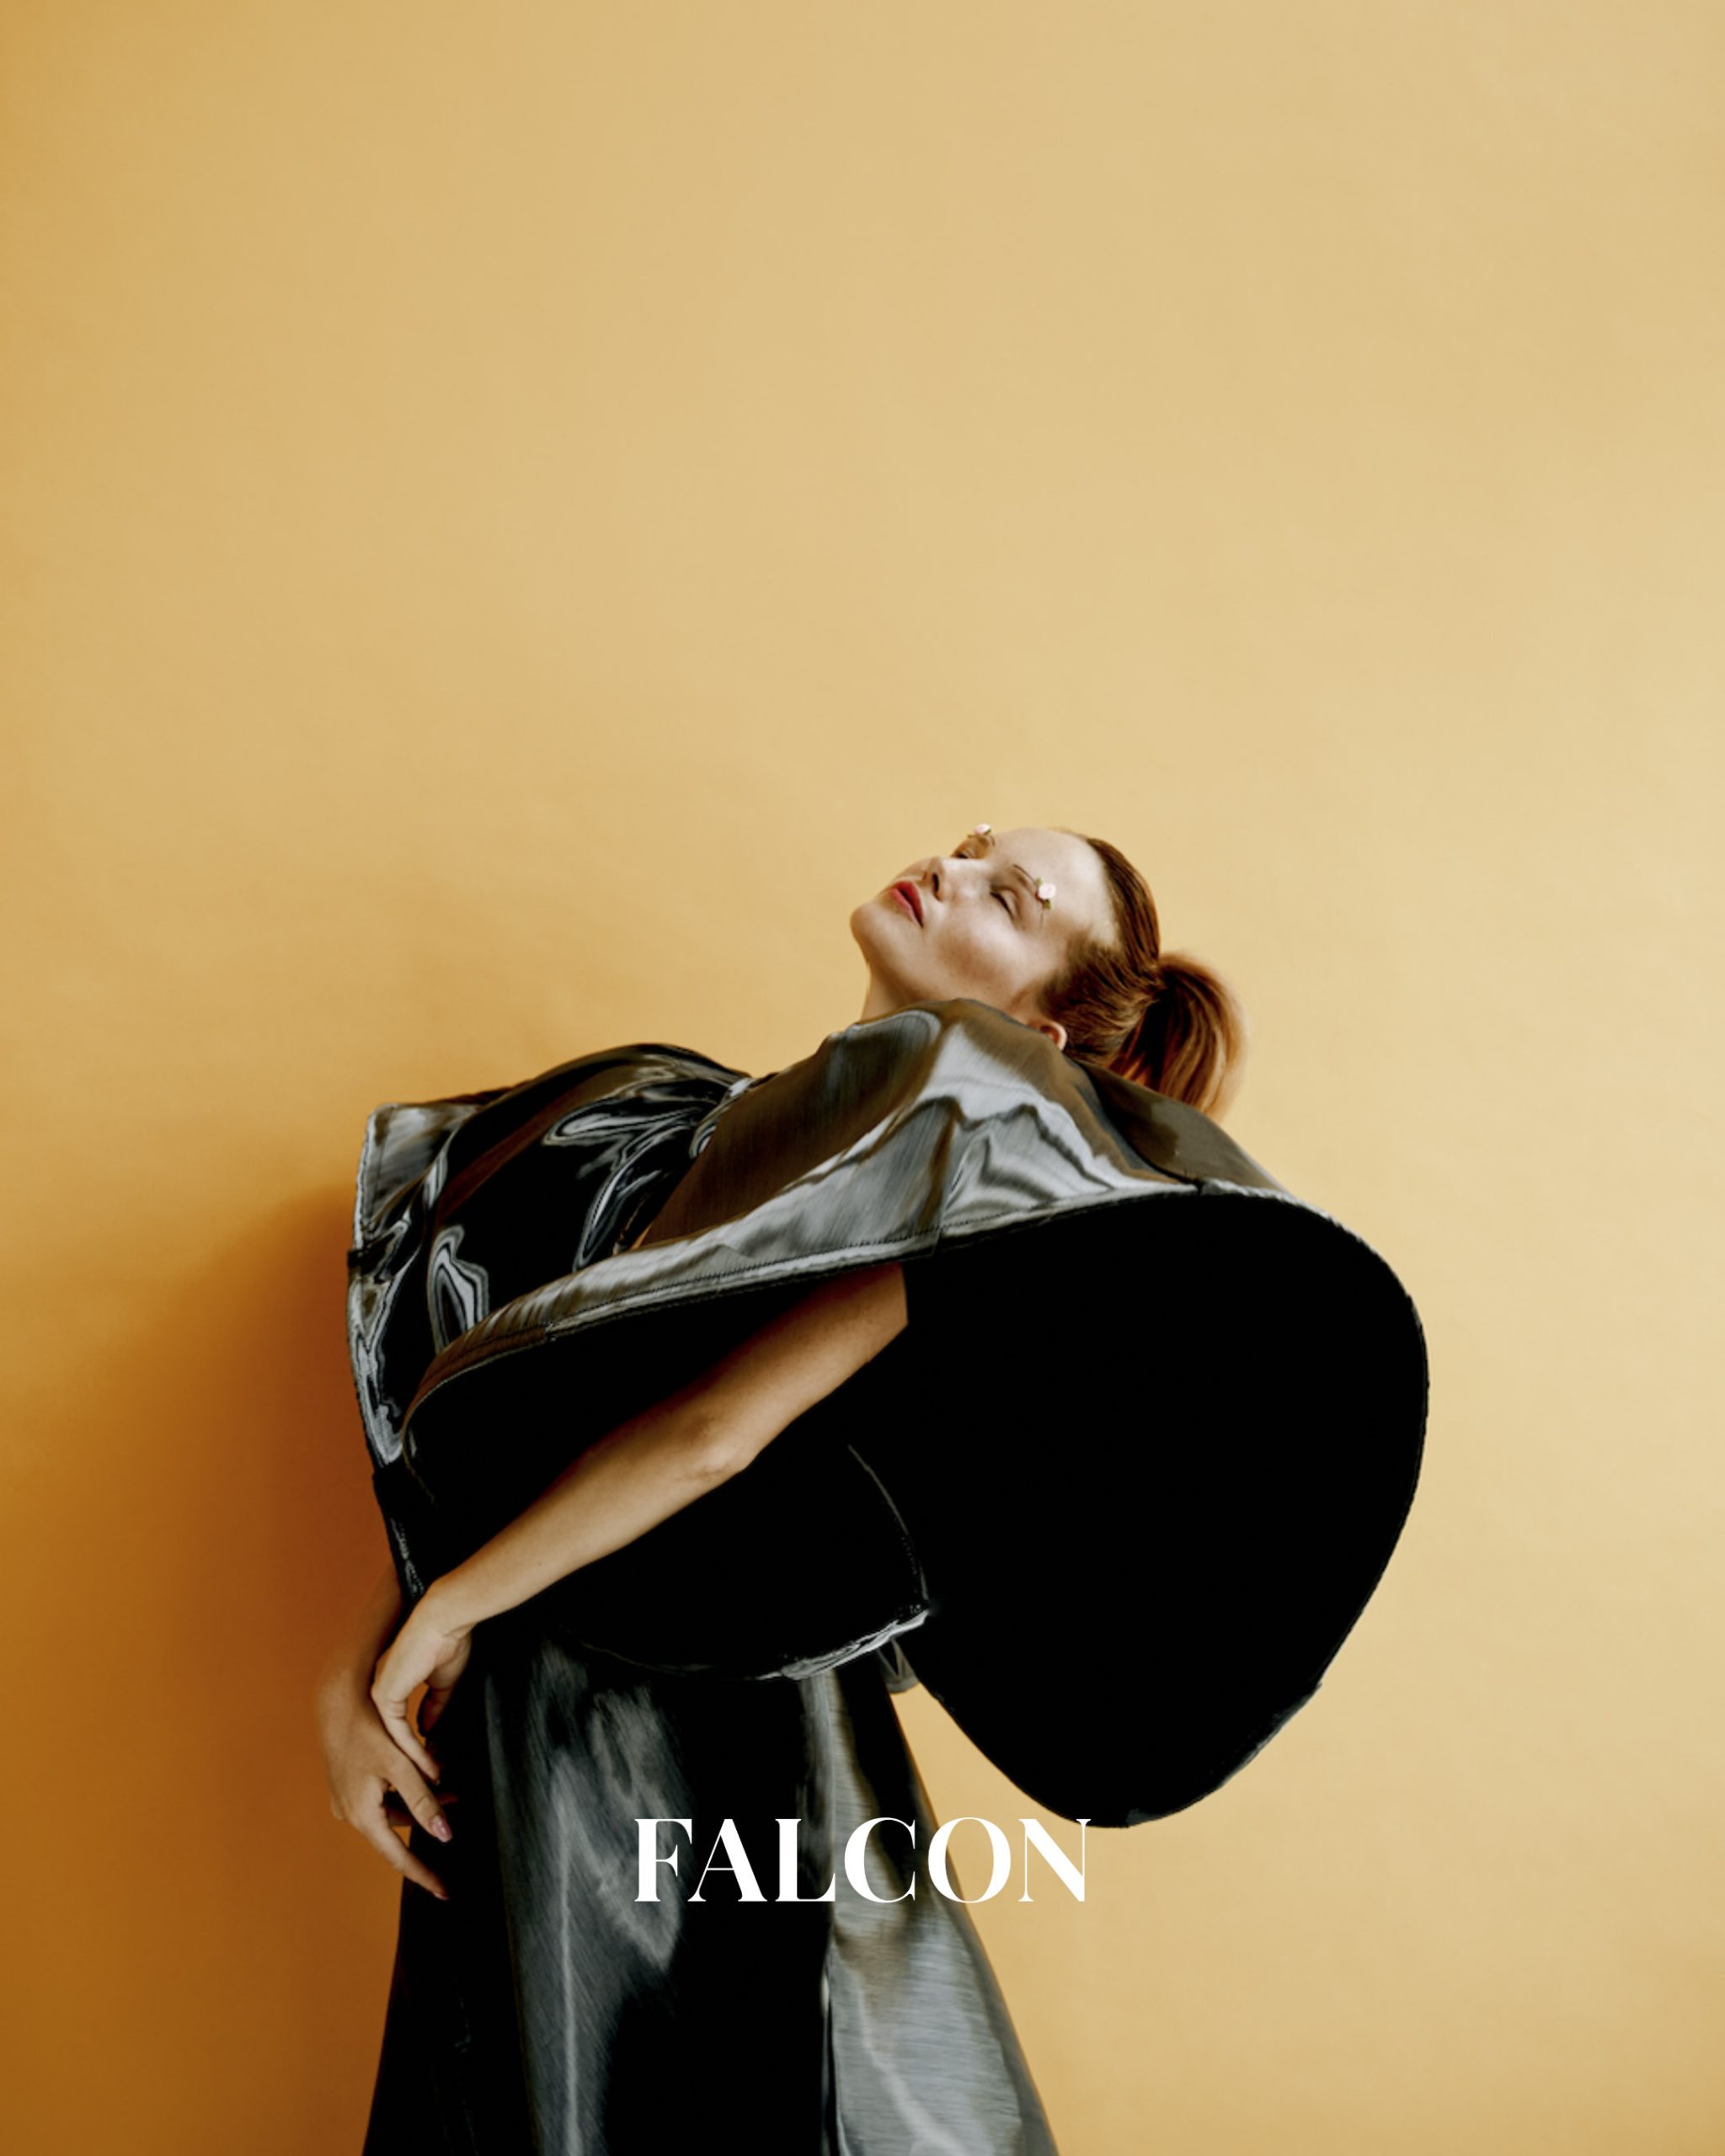 Falcon magazine - dress by TorriDesign